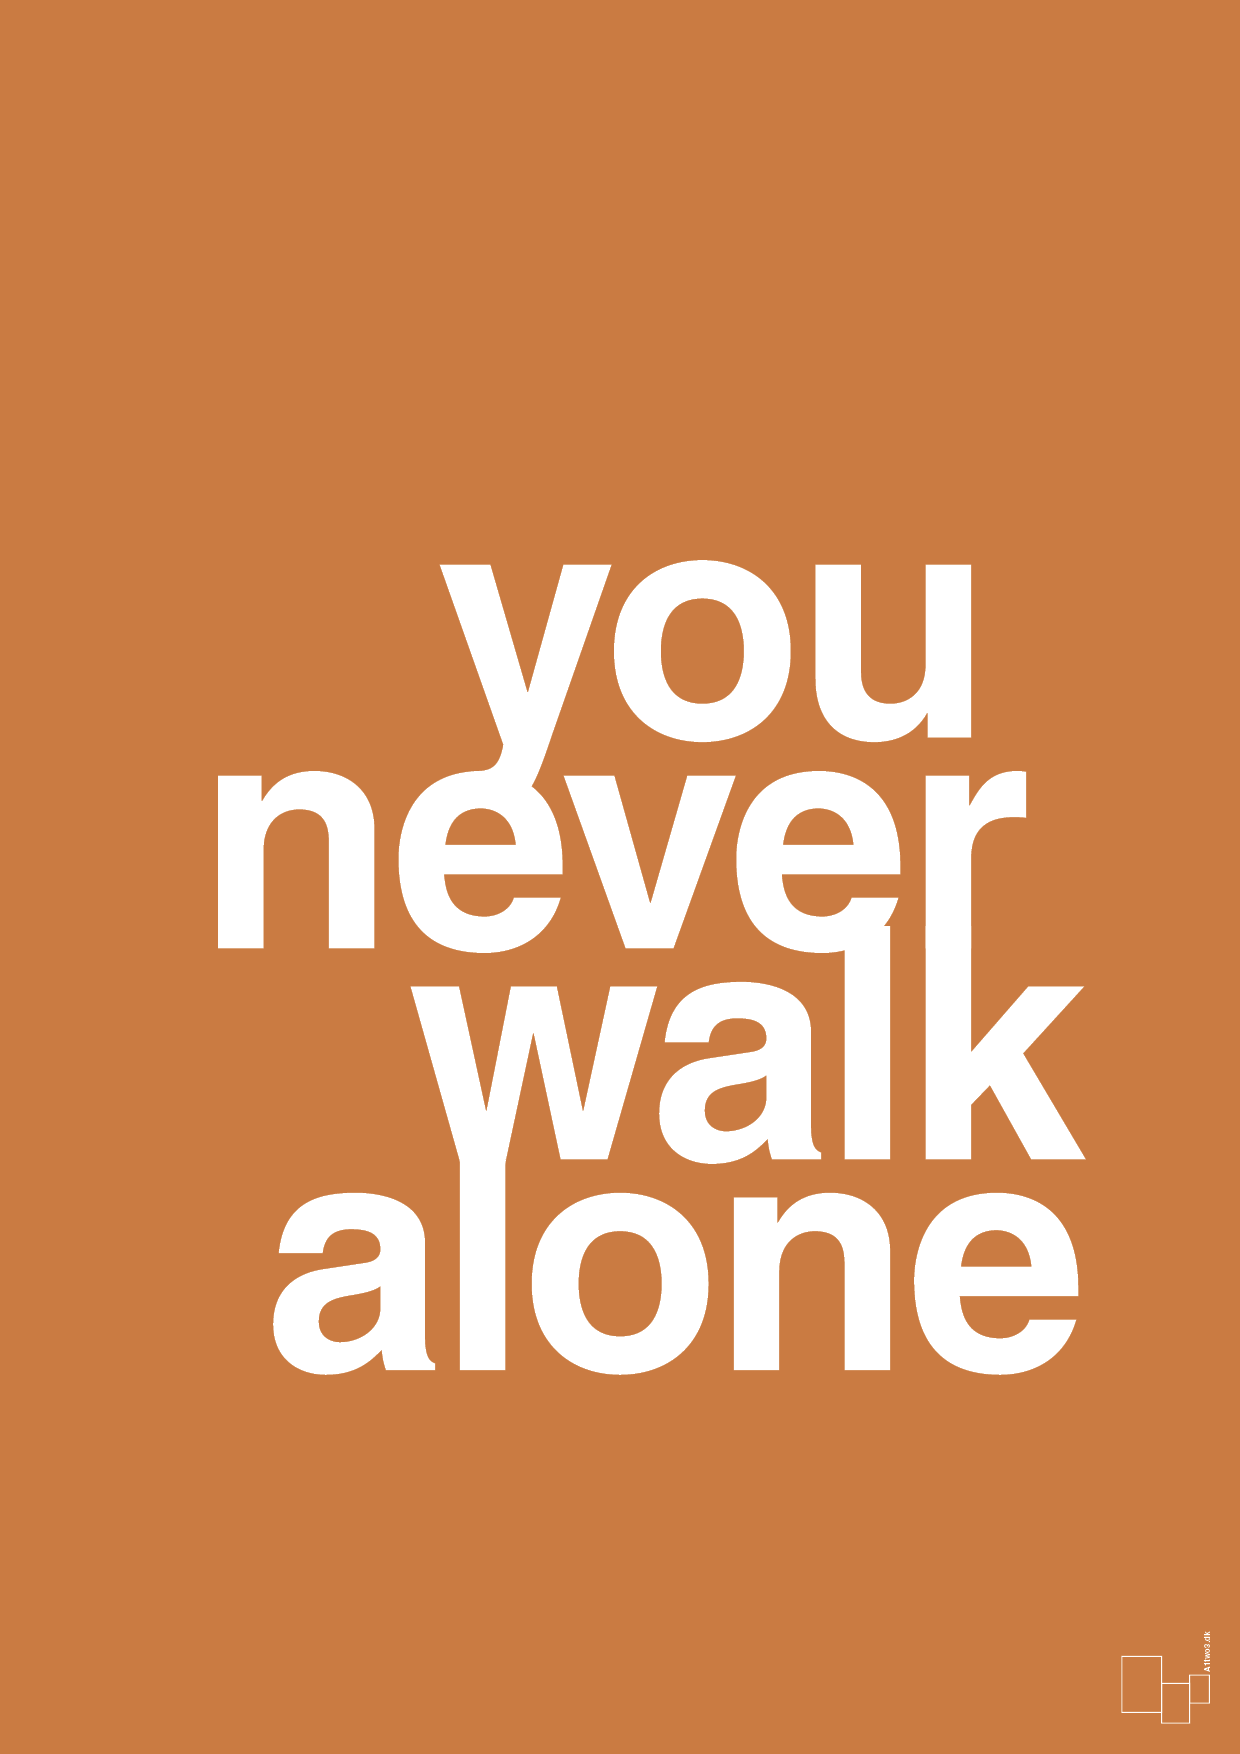 you never walk alone - Plakat med Ordsprog i Rumba Orange